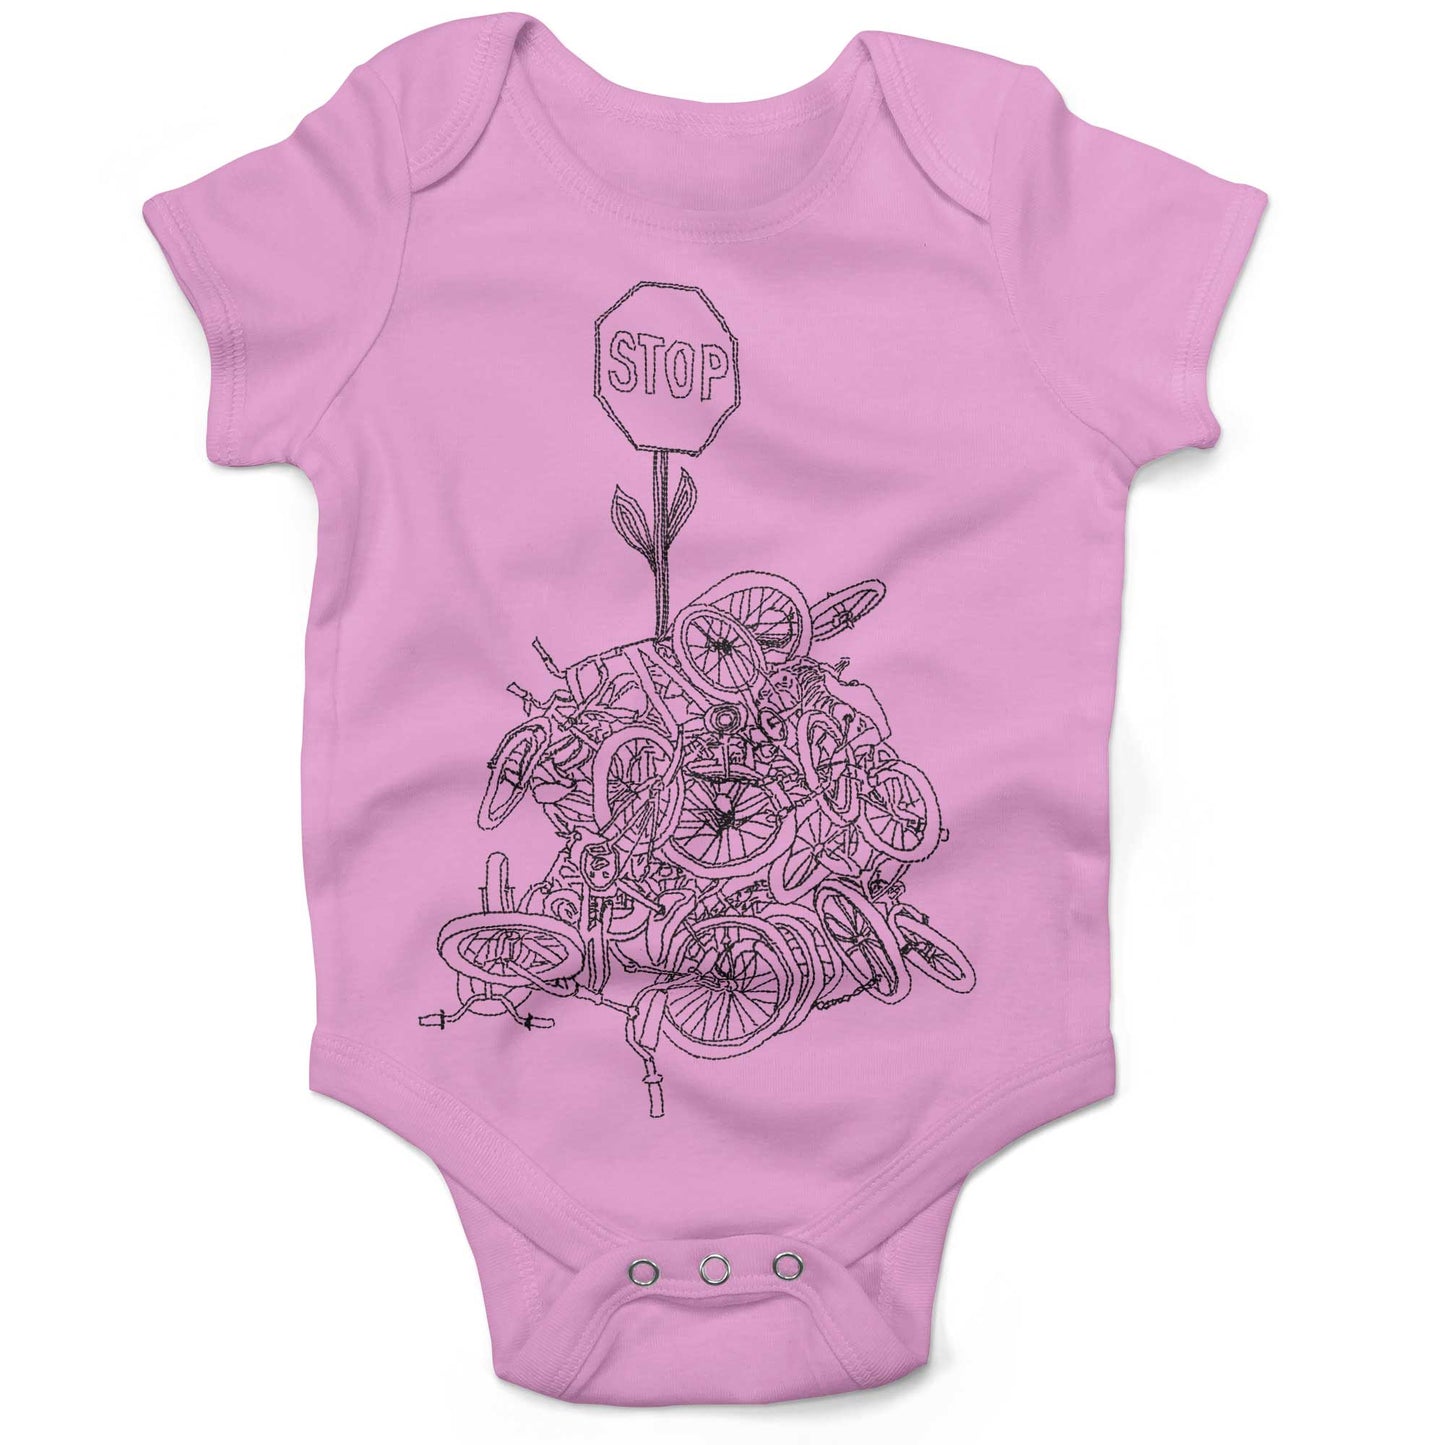 Zoobomber Bike Pyle Infant Bodysuit or Raglan Baby Tee-Organic Pink-3-6 months